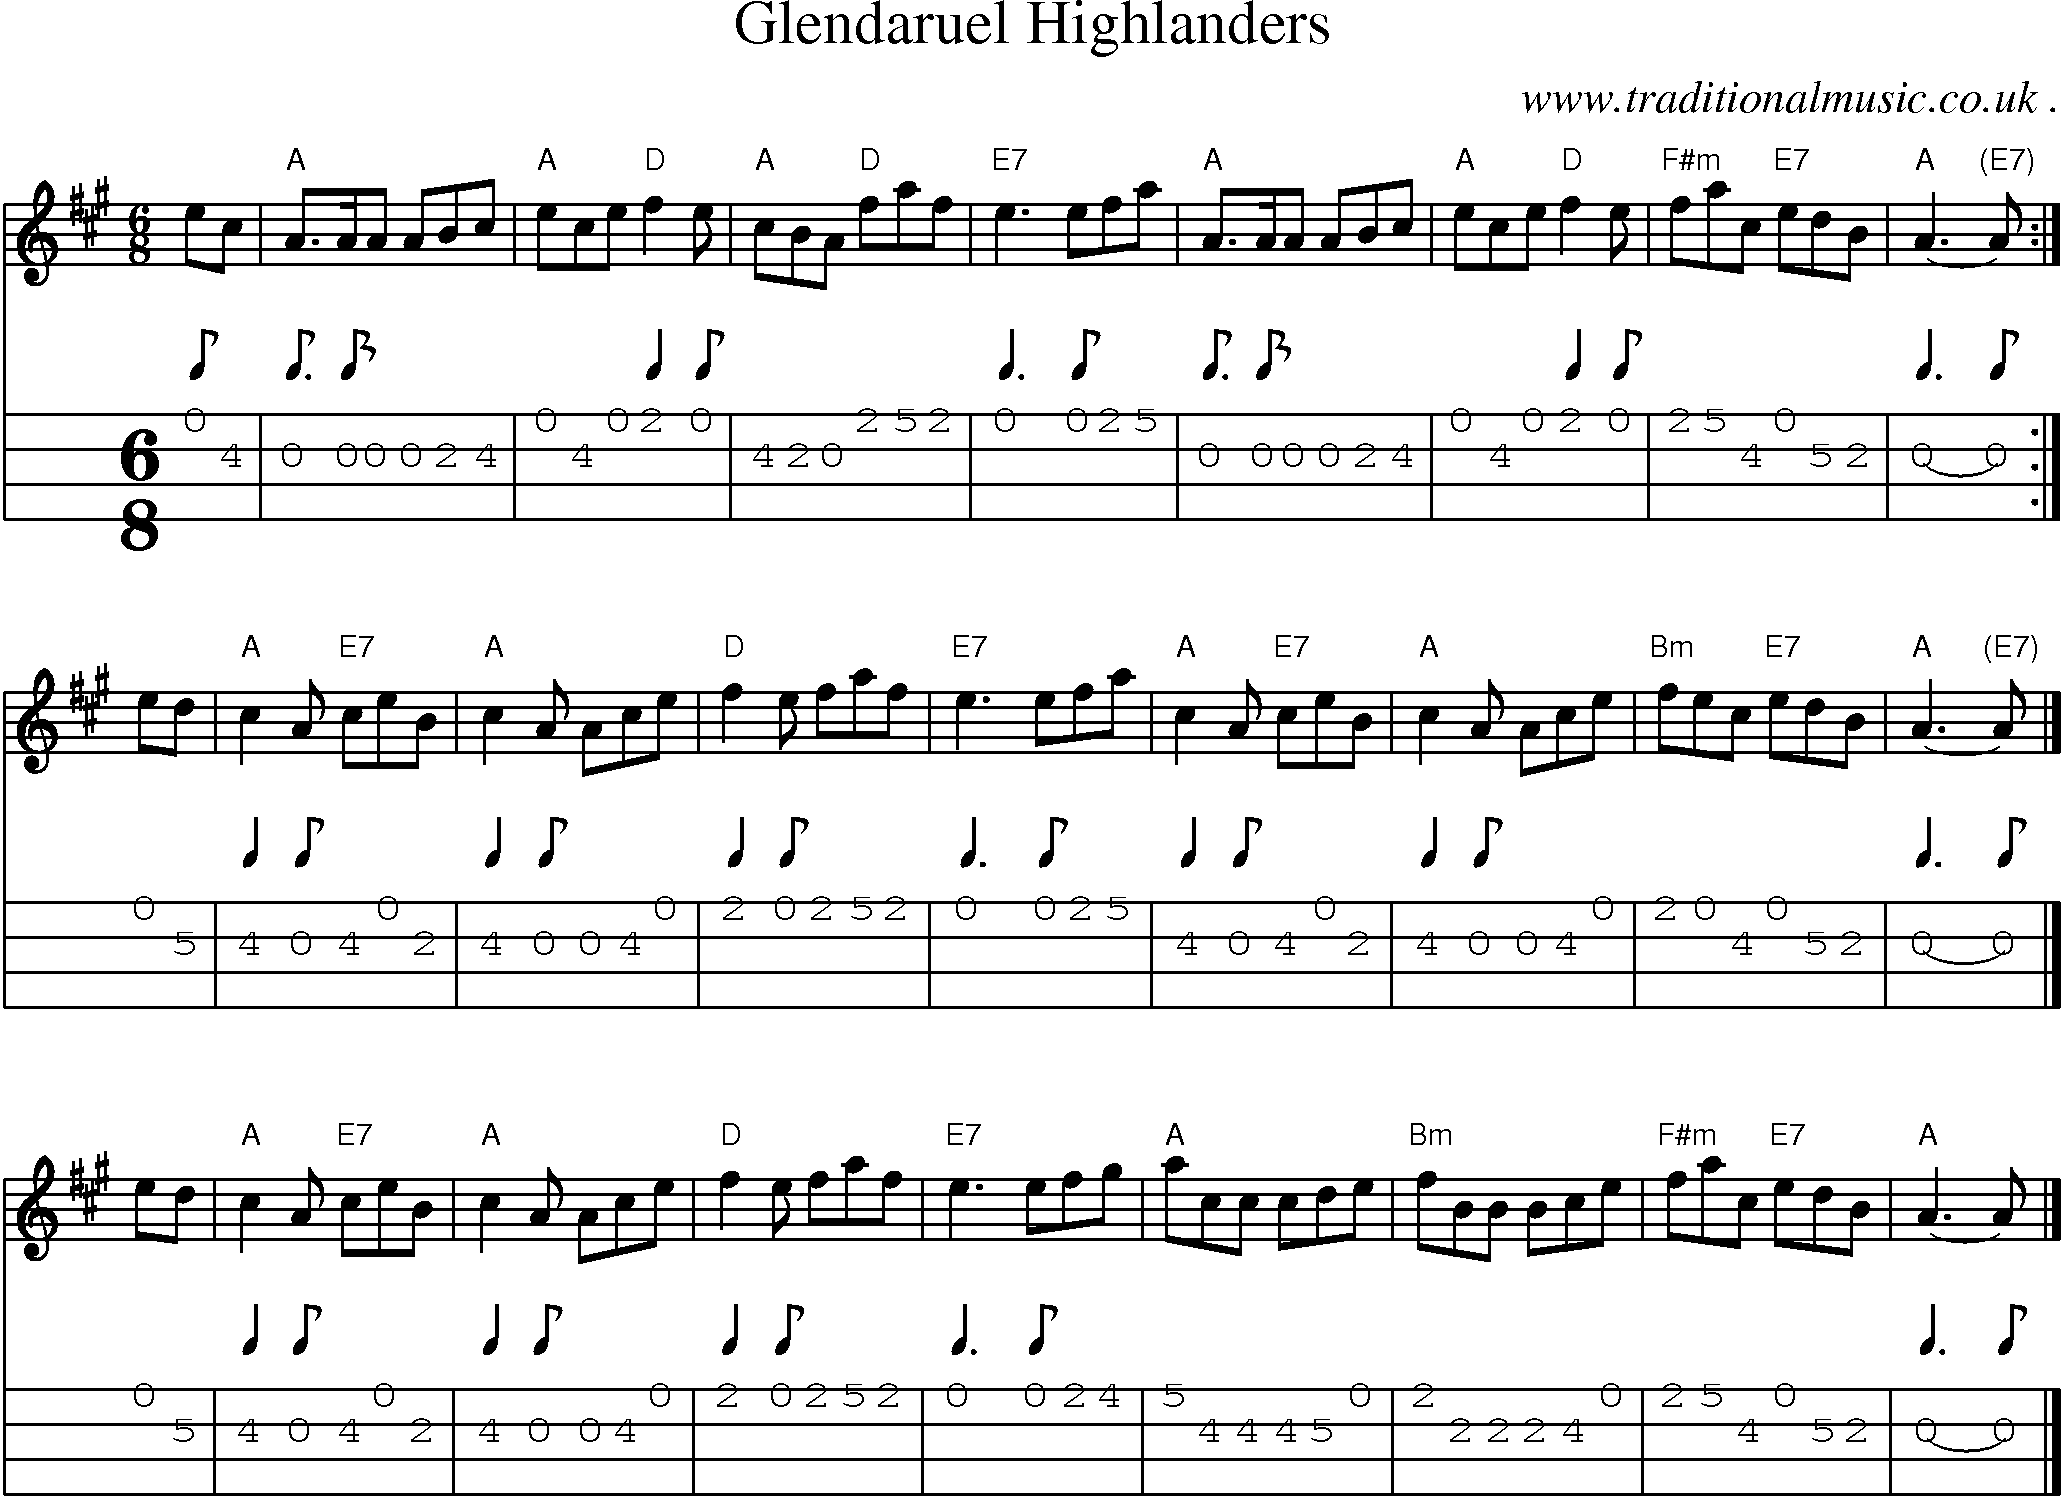 Sheet-music  score, Chords and Mandolin Tabs for Glendaruel Highlanders